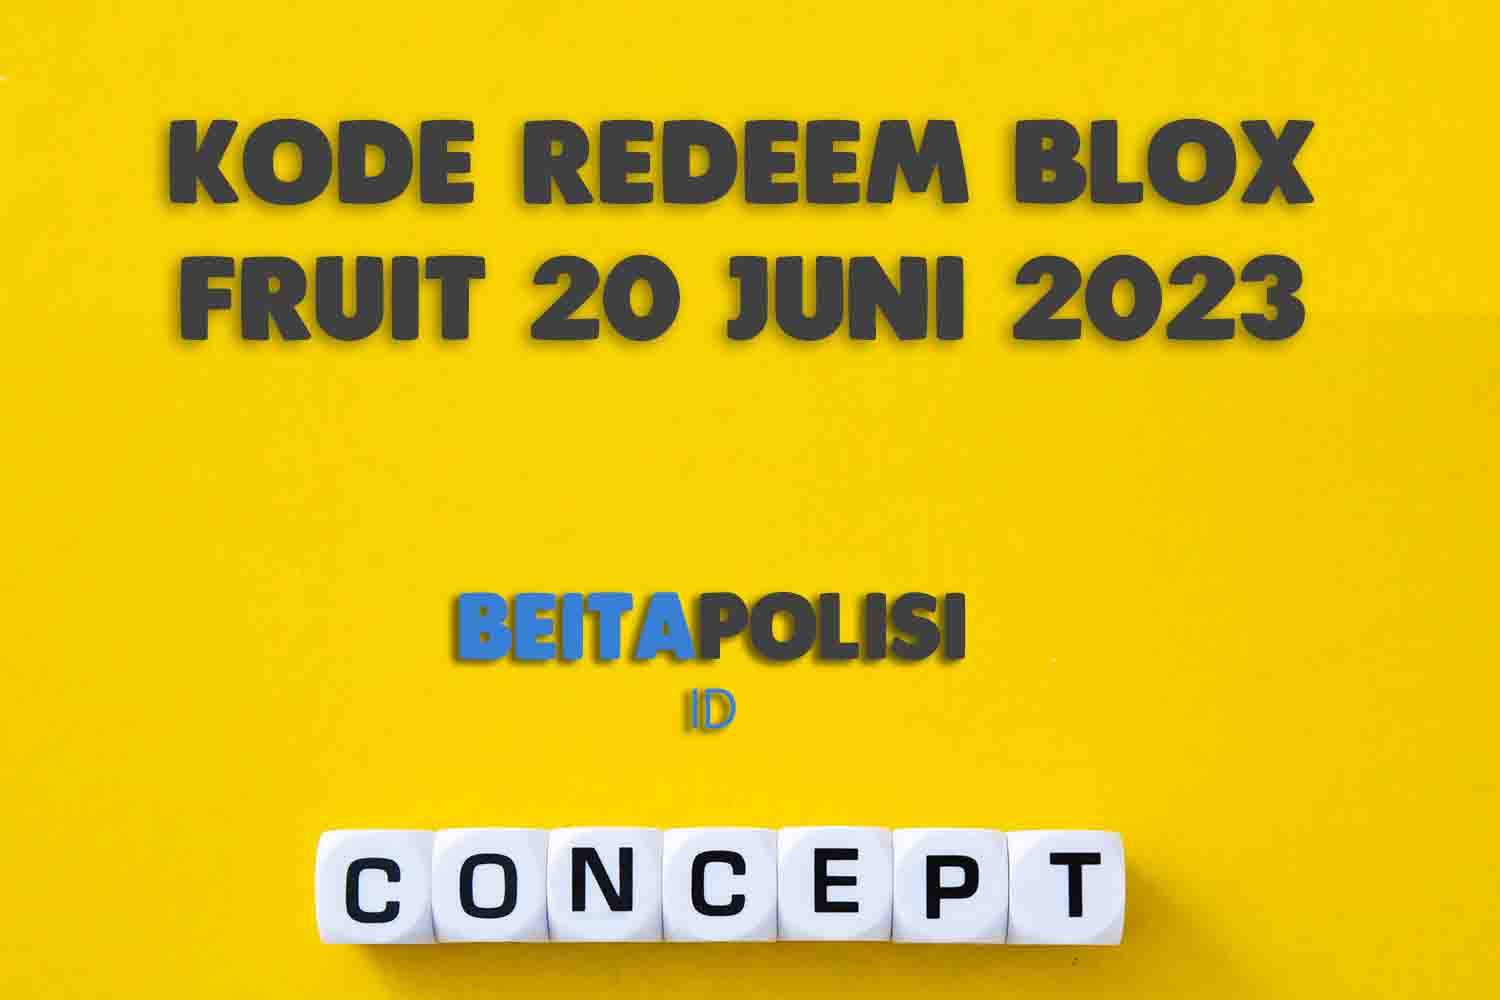 Kode Redeem Blox Fruit 20 Juni 2023